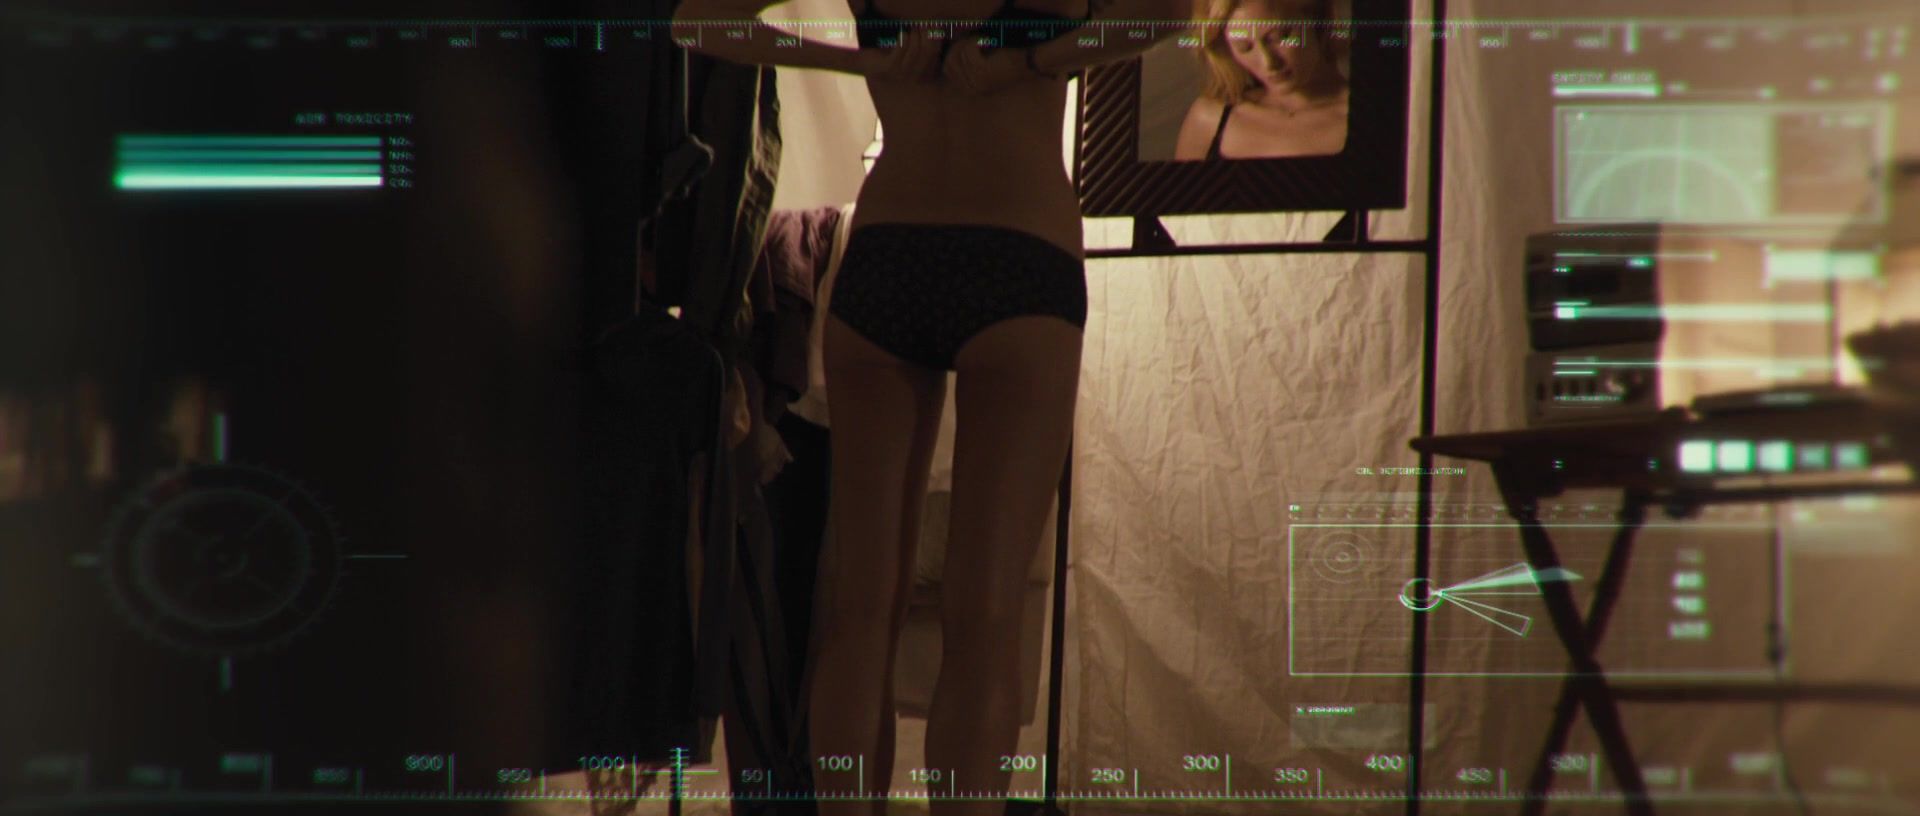 Javon Hot actress Ashley Hinshaw from movie The Pyramid (2014) Erotic